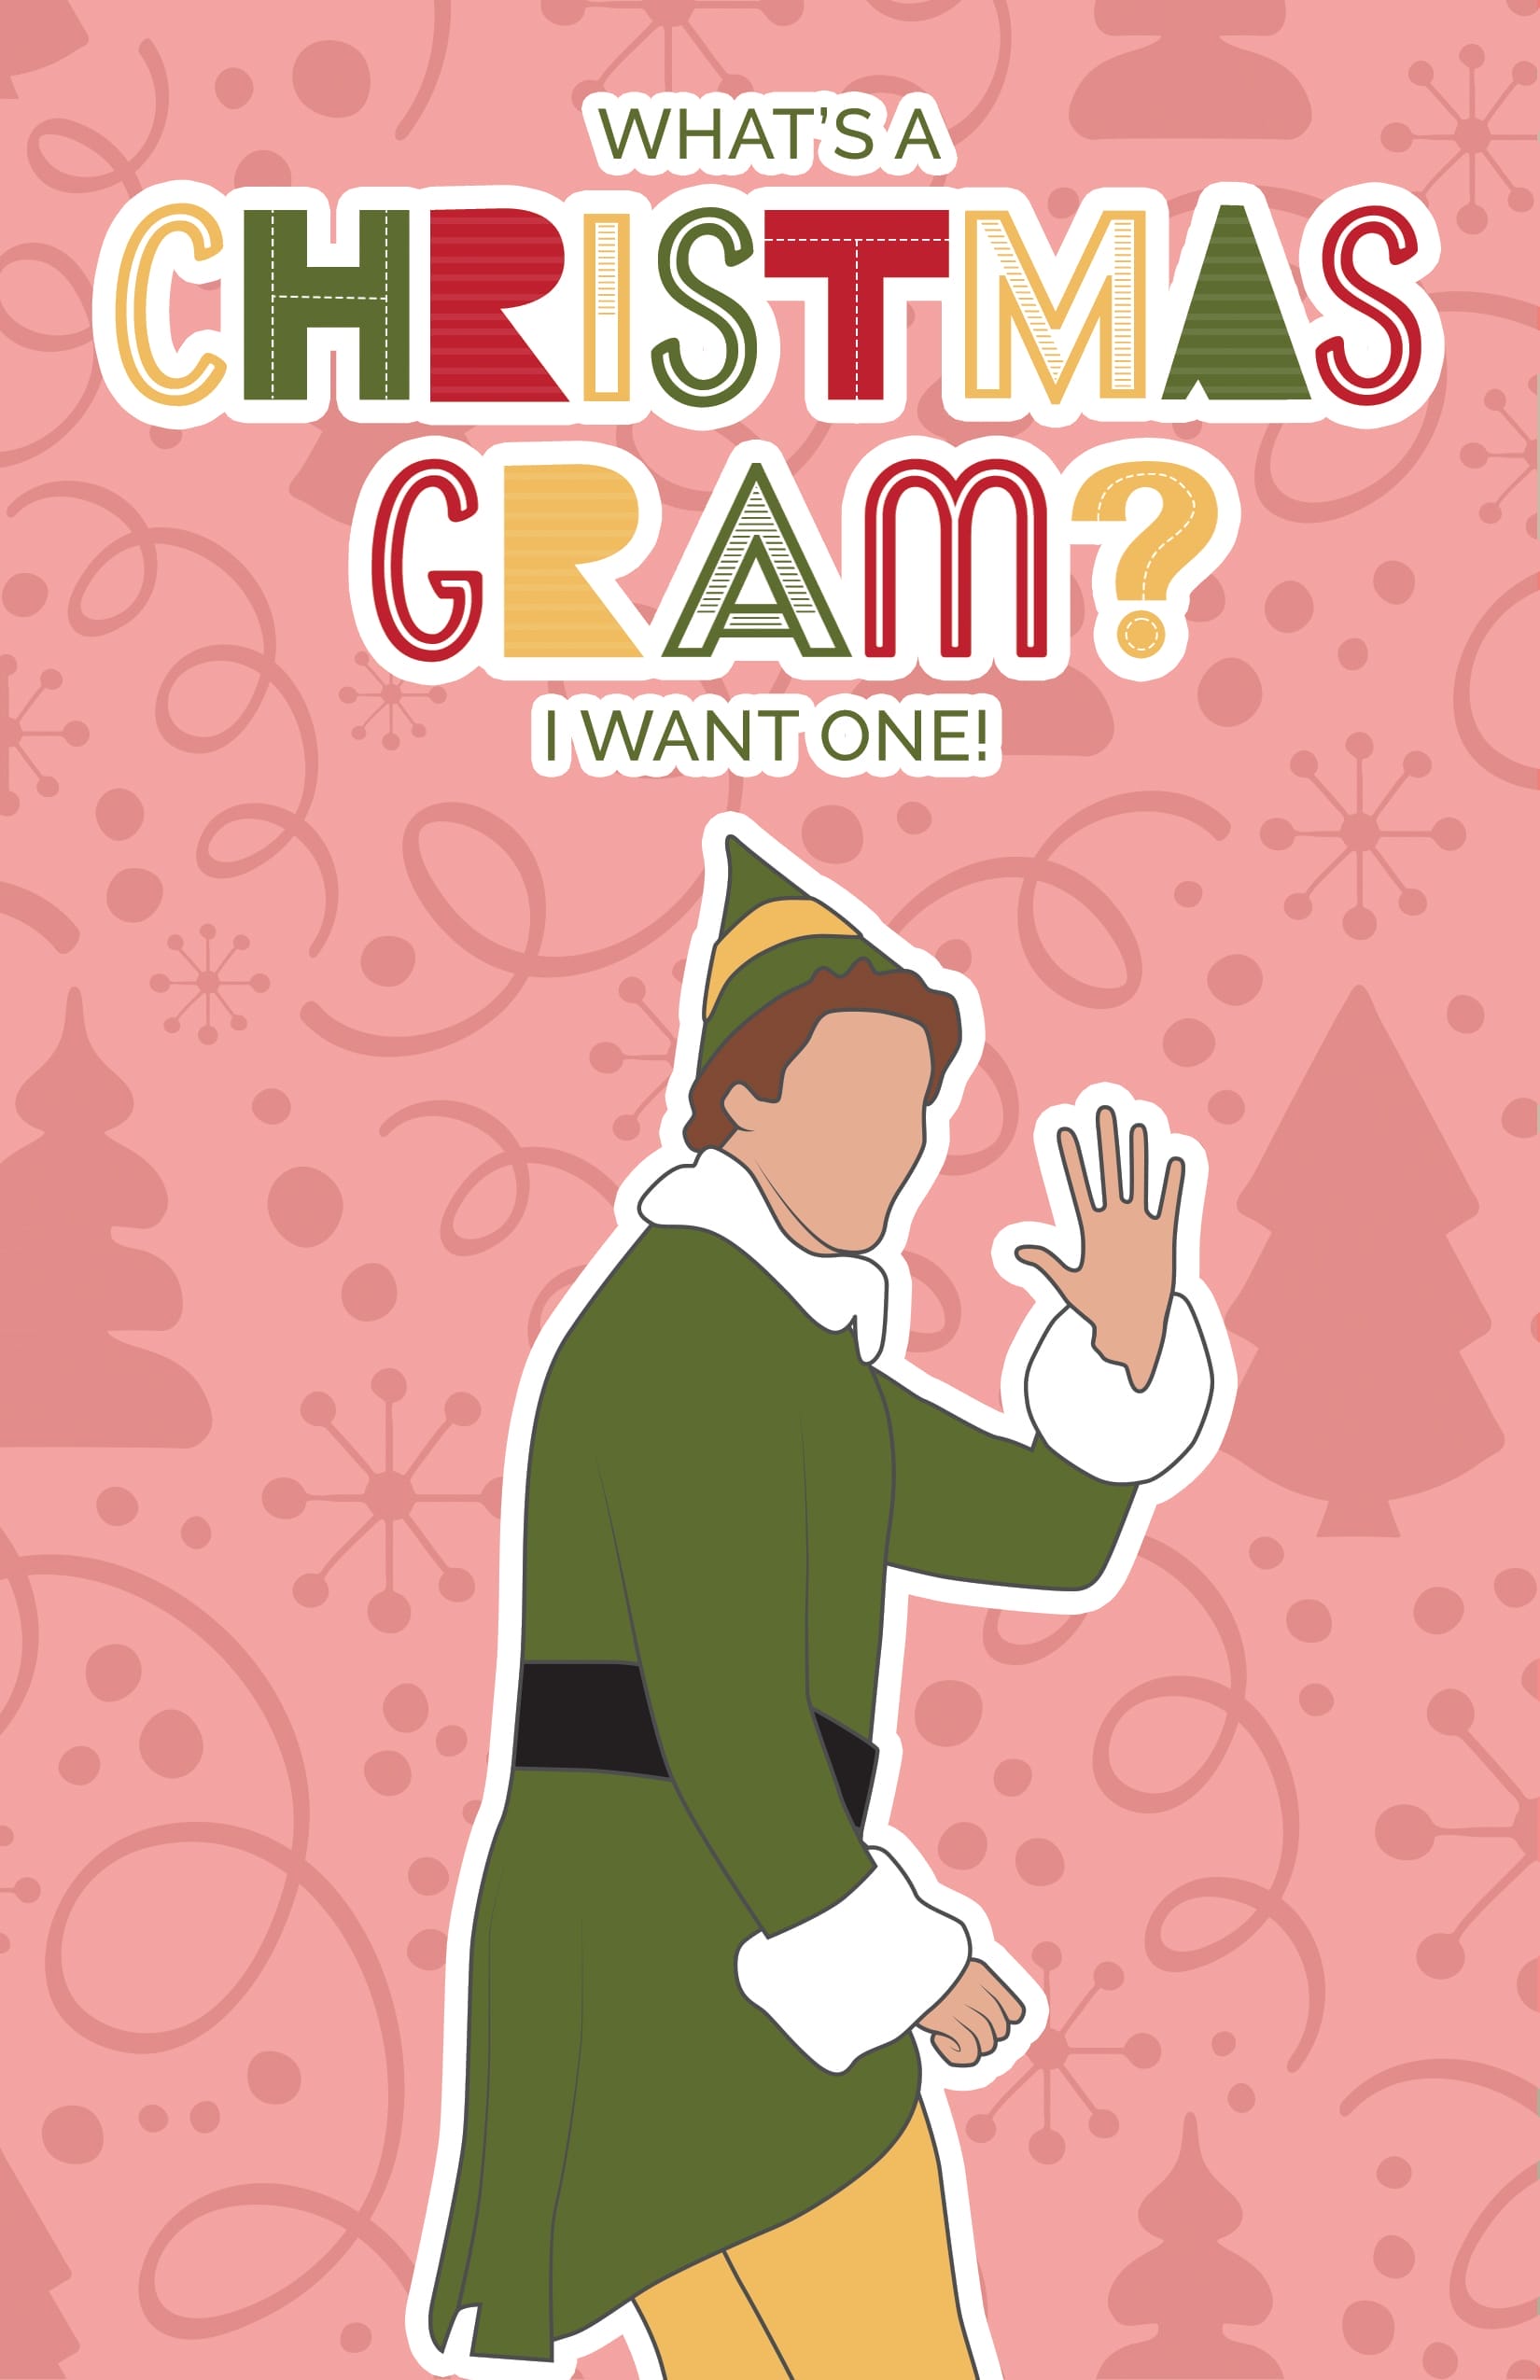 What's a Christmas Gram? ecard